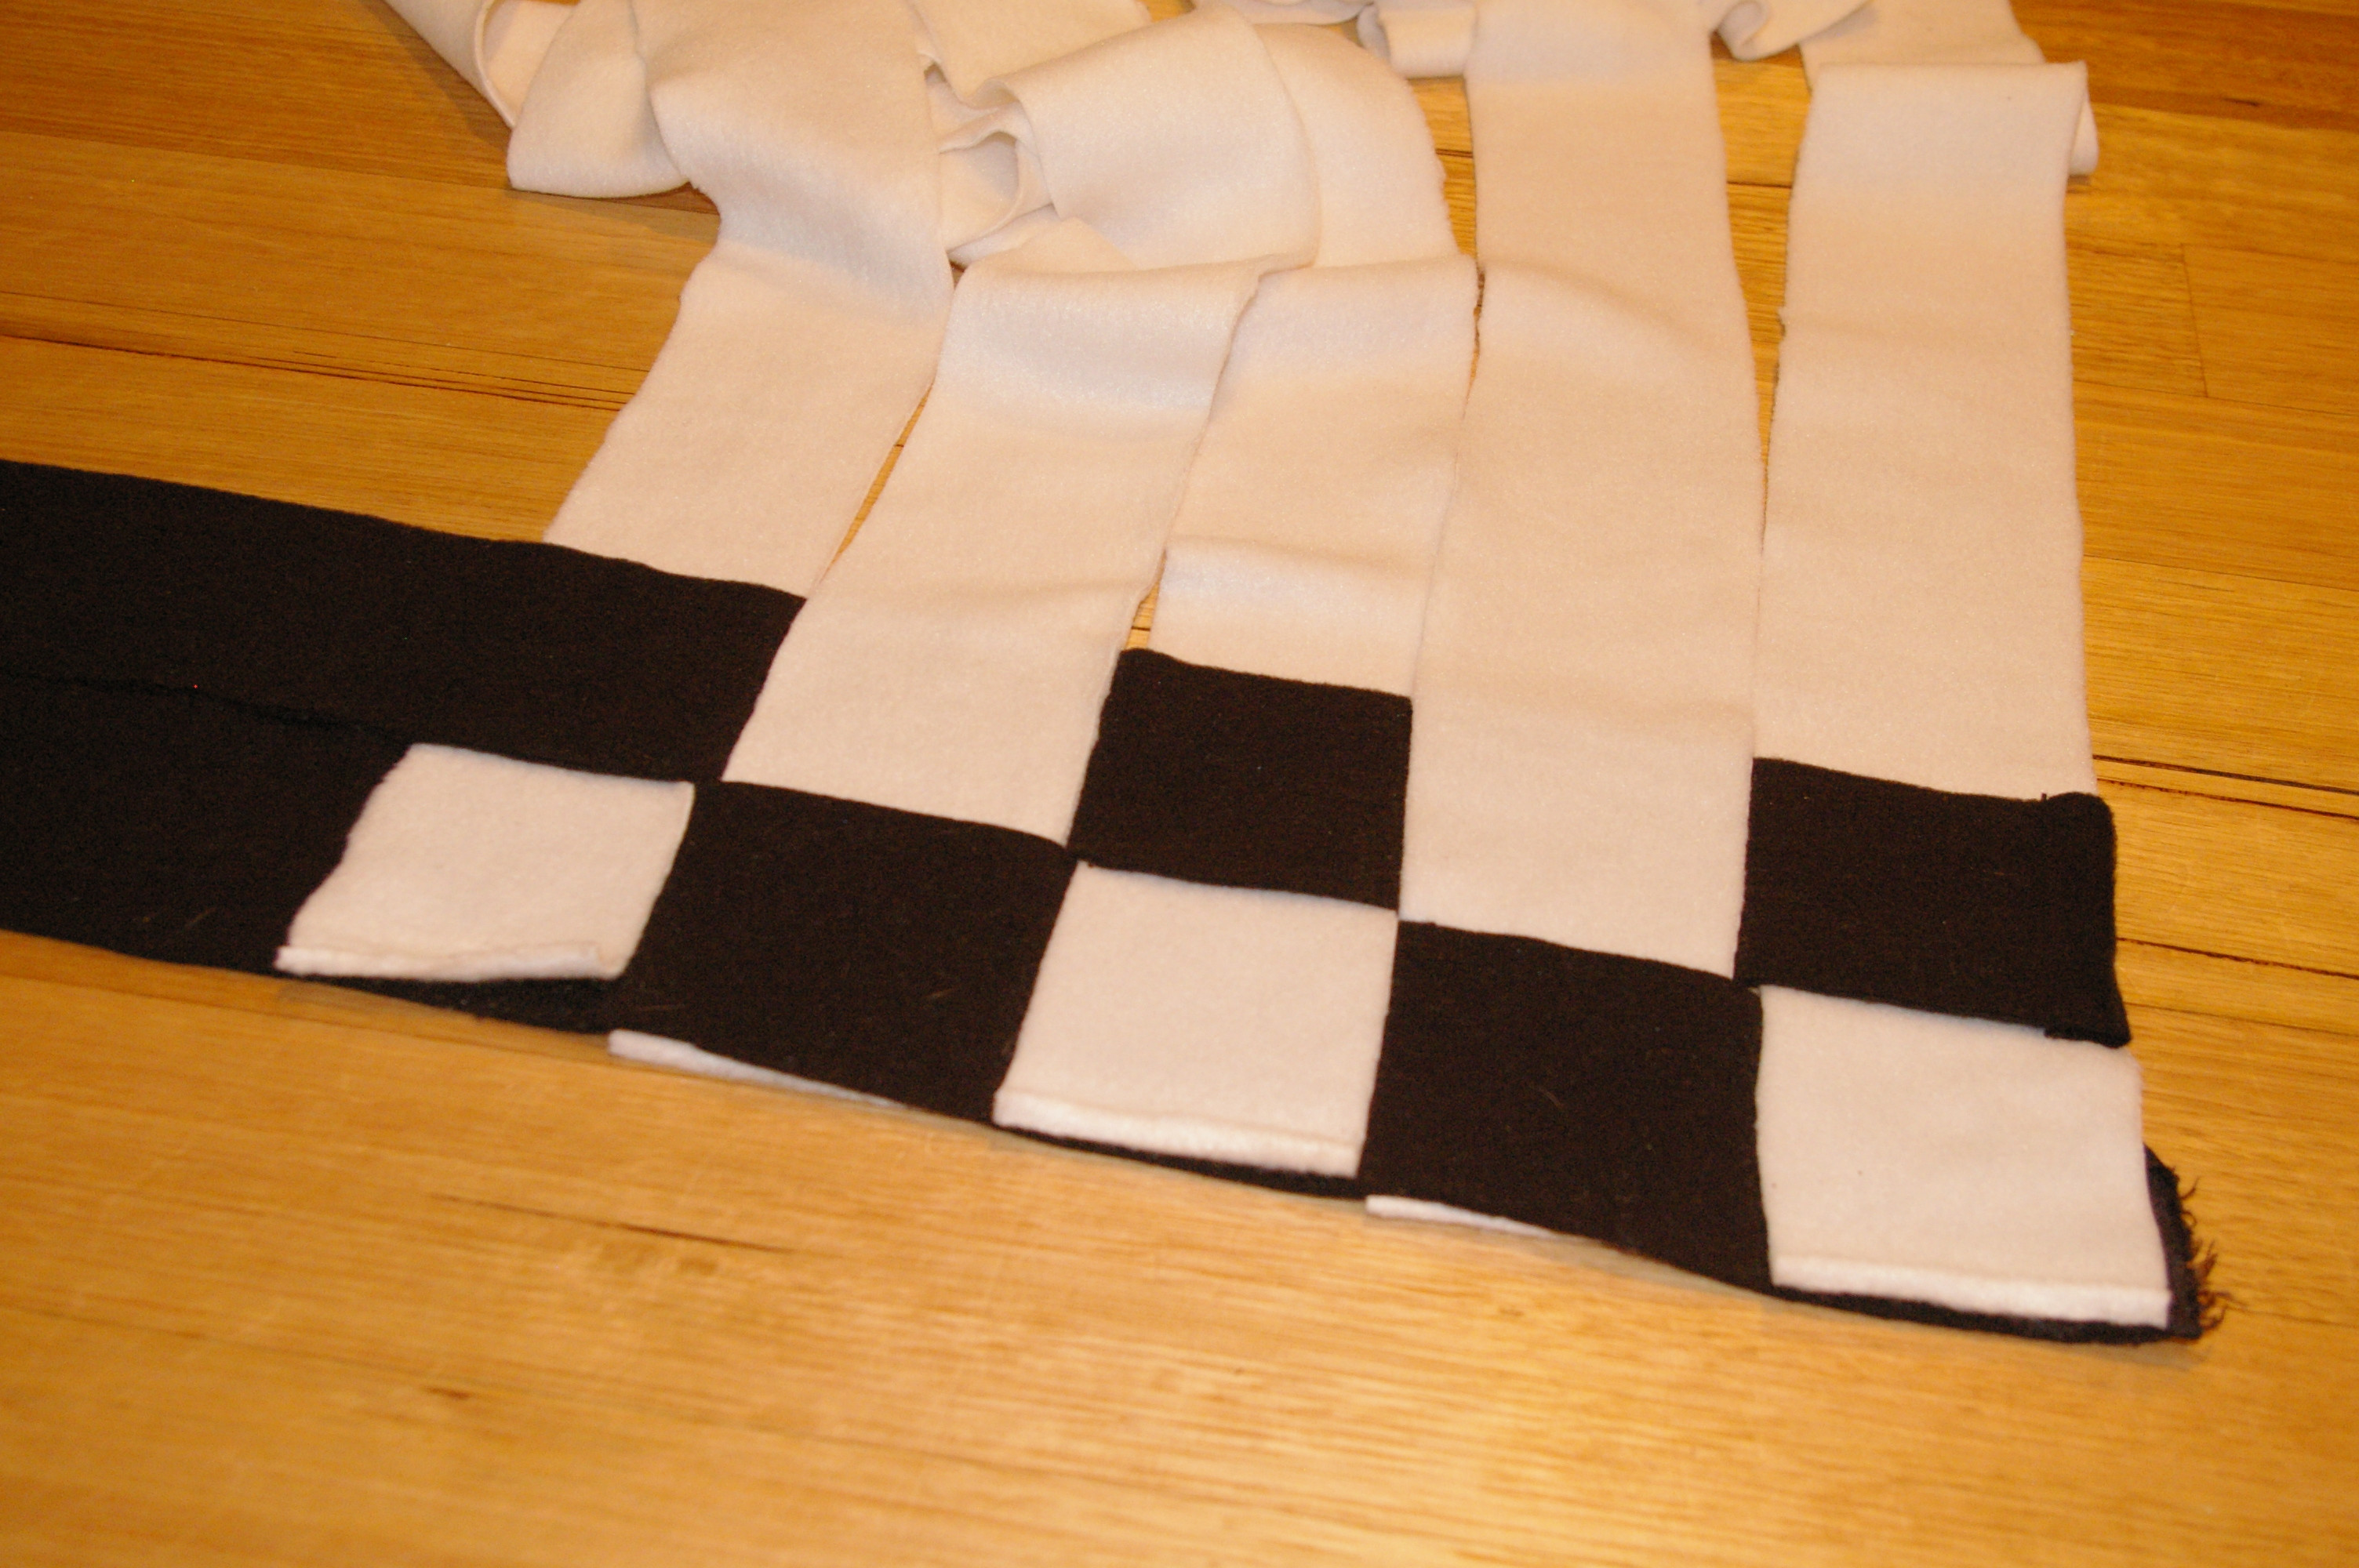 Best ideas about Fleece Blankets DIY
. Save or Pin DIY Woven Fleece Blanket Now.